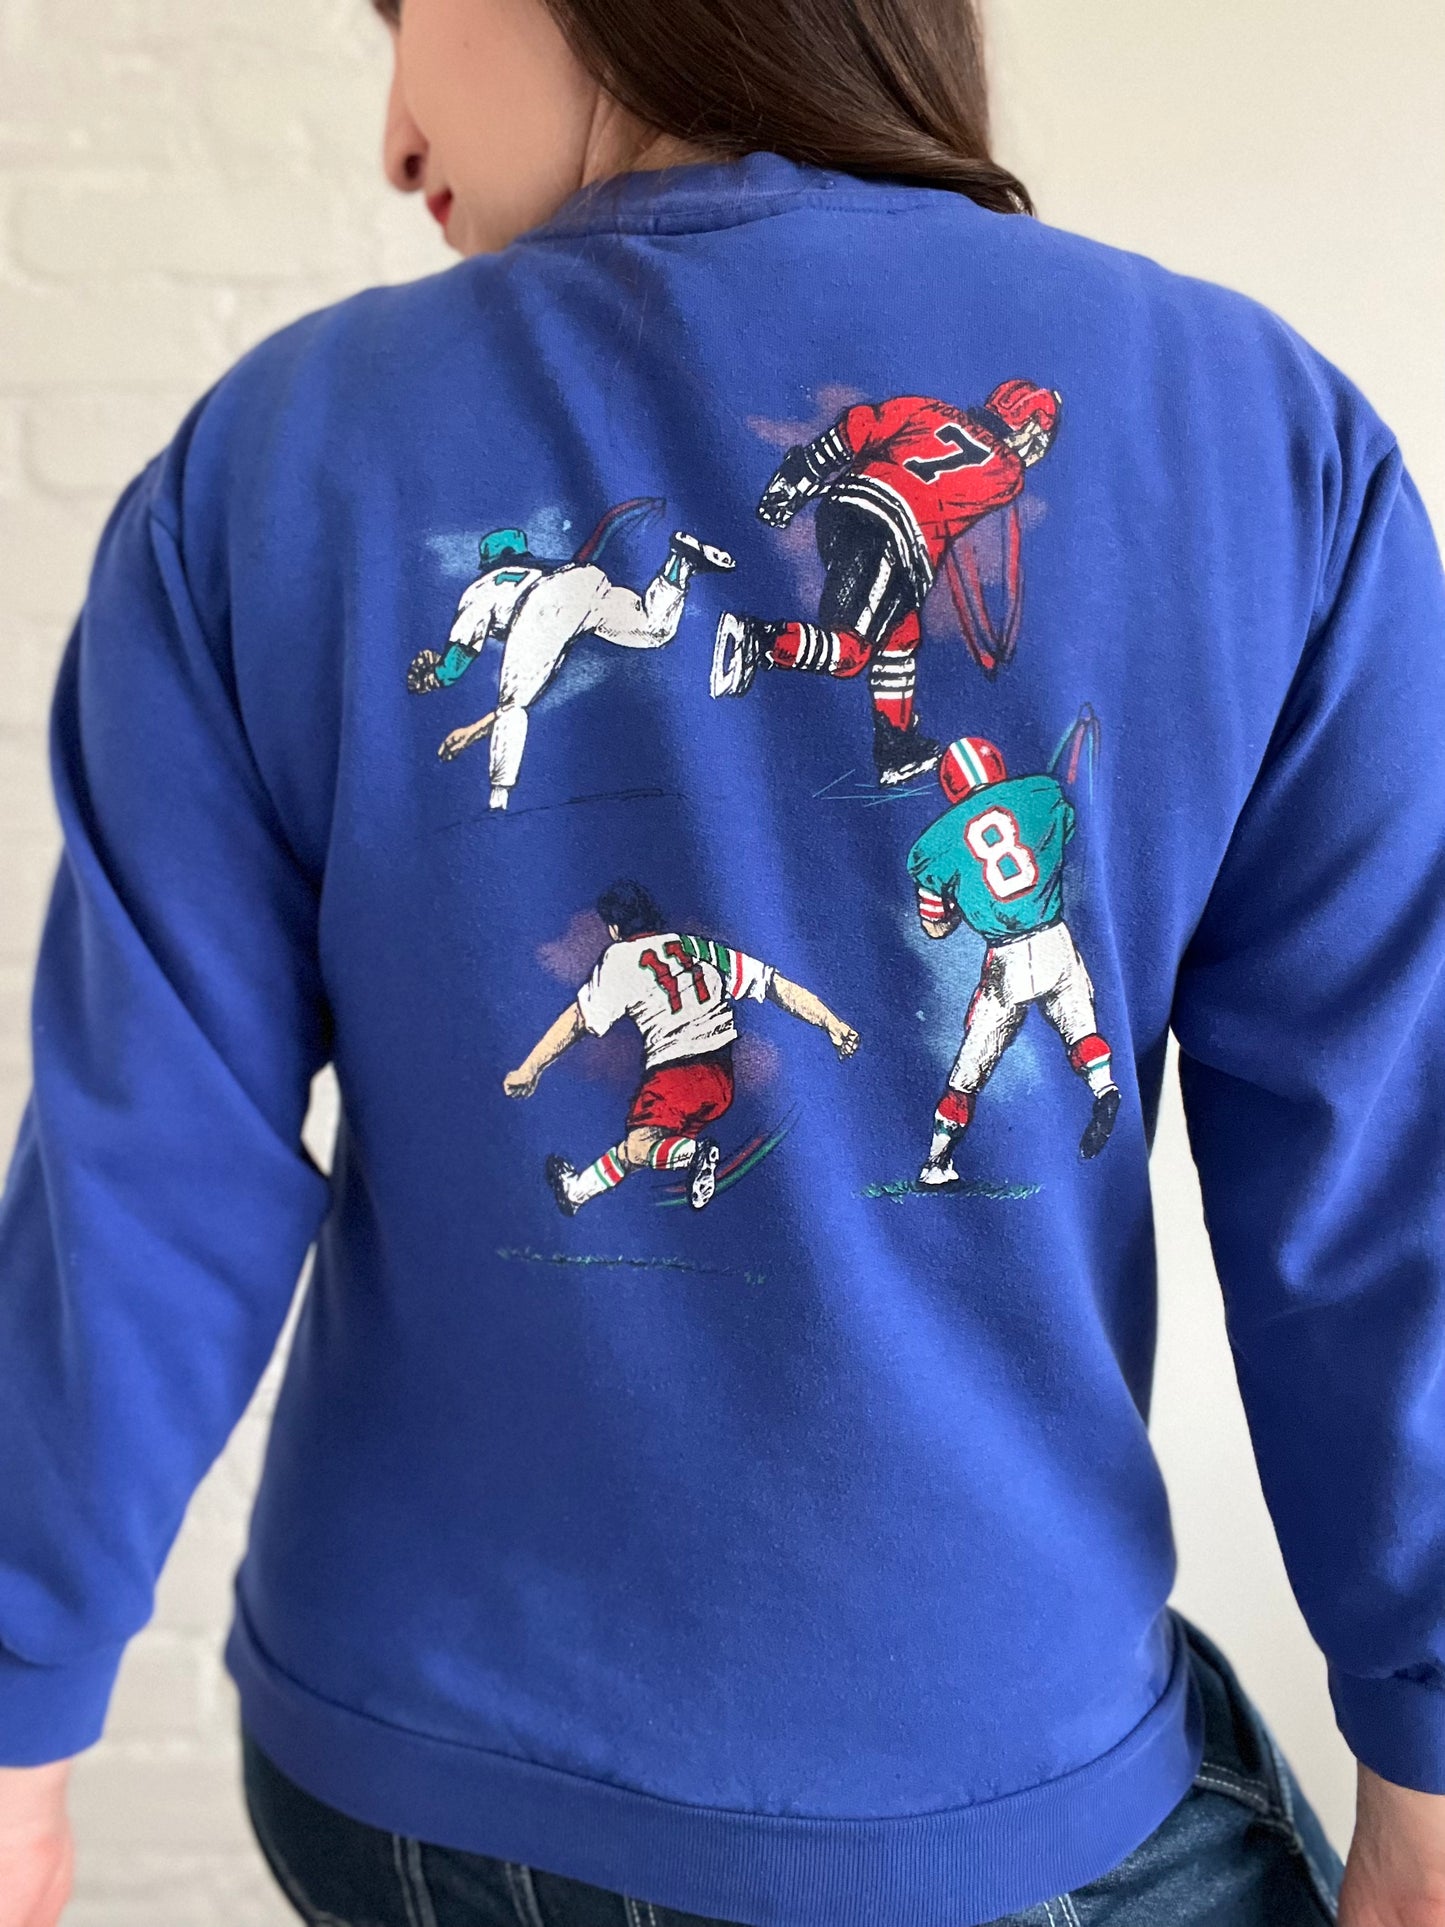 Multi-Sport Northern Getaway Graphic Sweater - XS/S